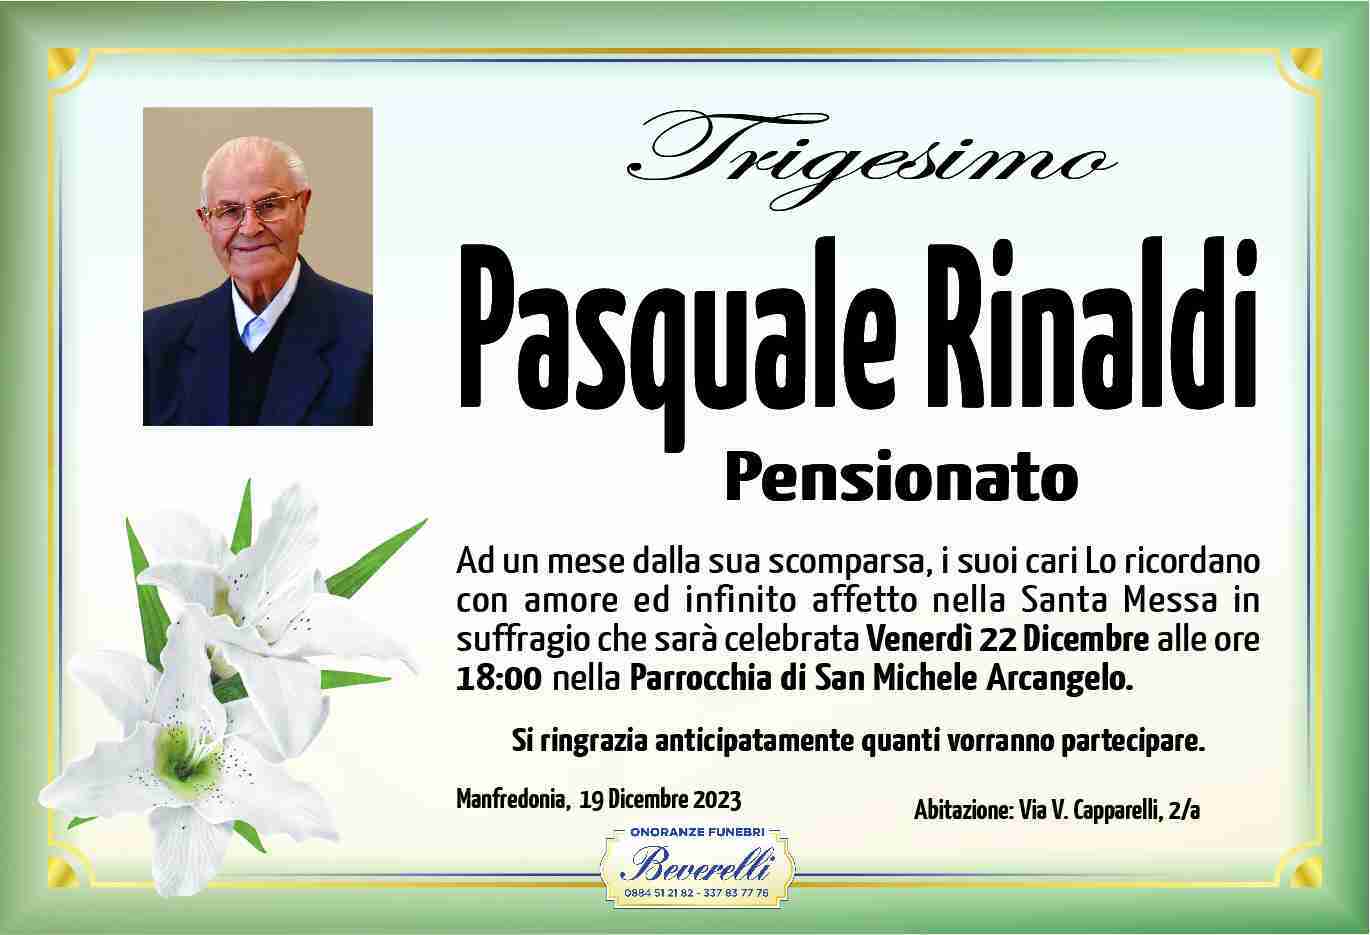 Pasquale Rinaldi